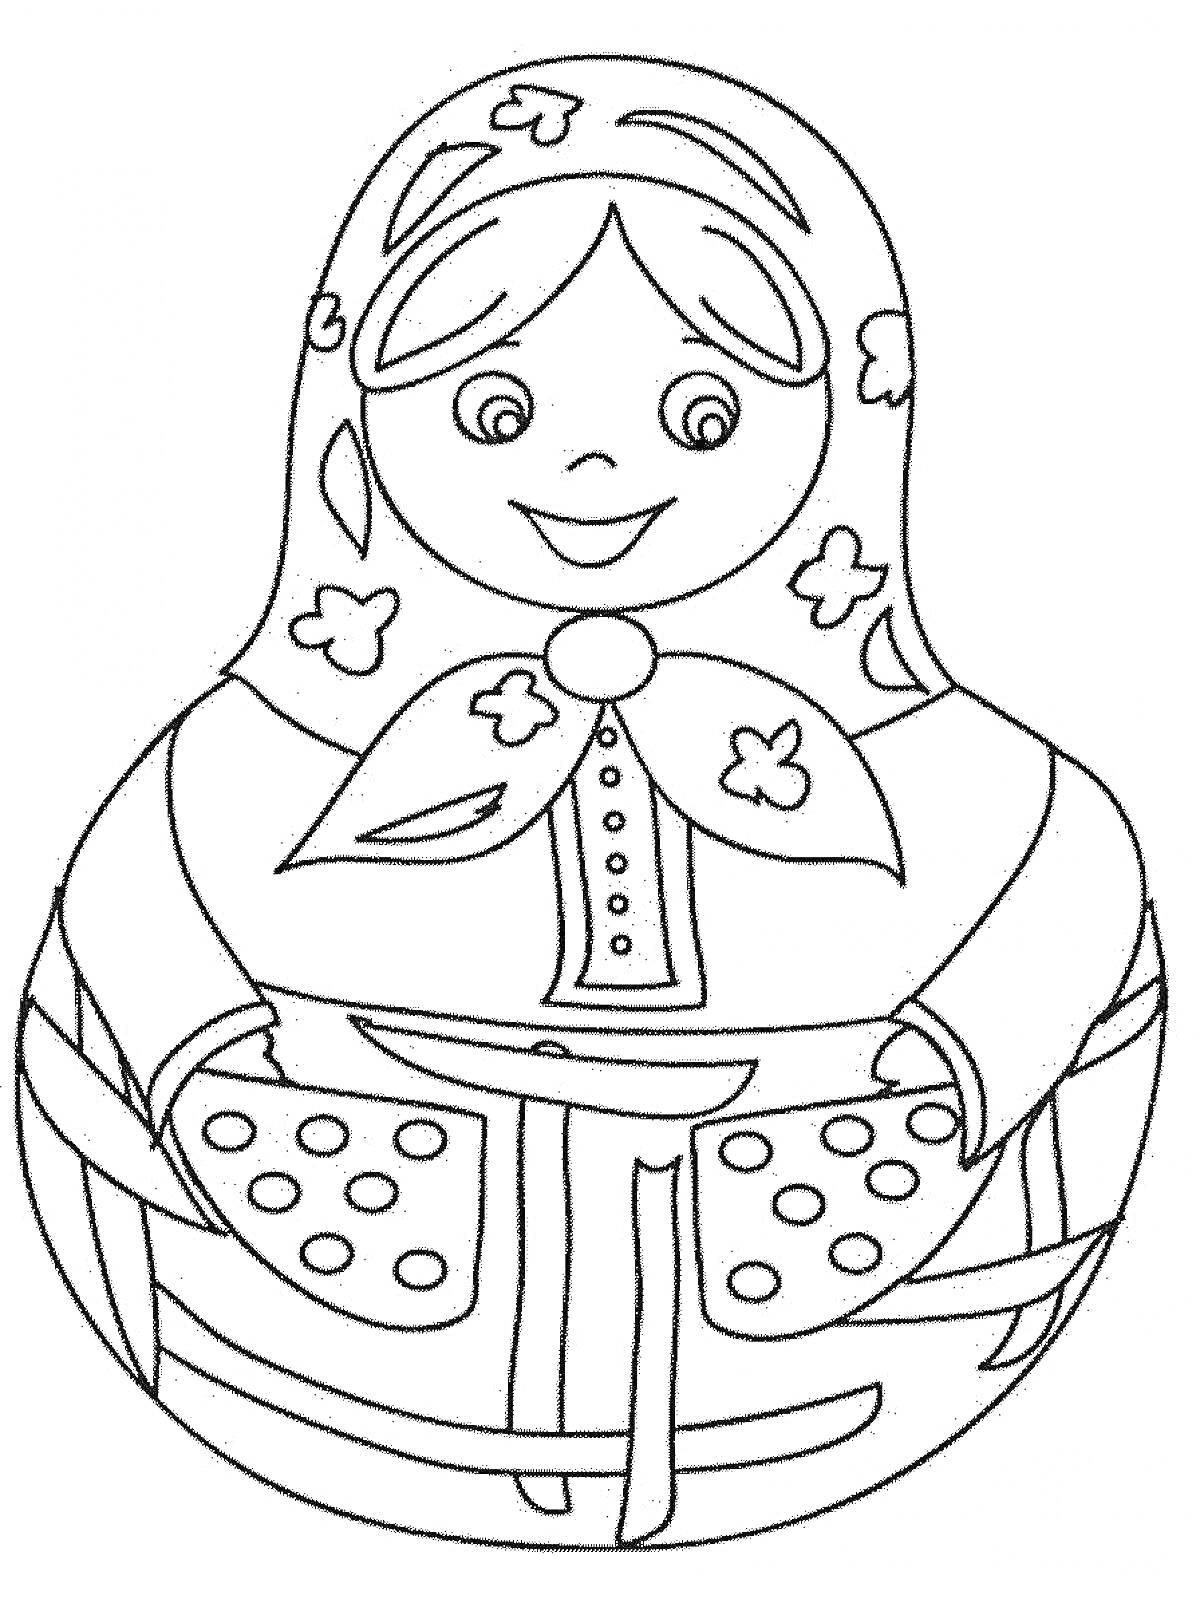 Раскраска Матрешка с узорами на платке и сарафане, улыбающаяся с шарфом на шее